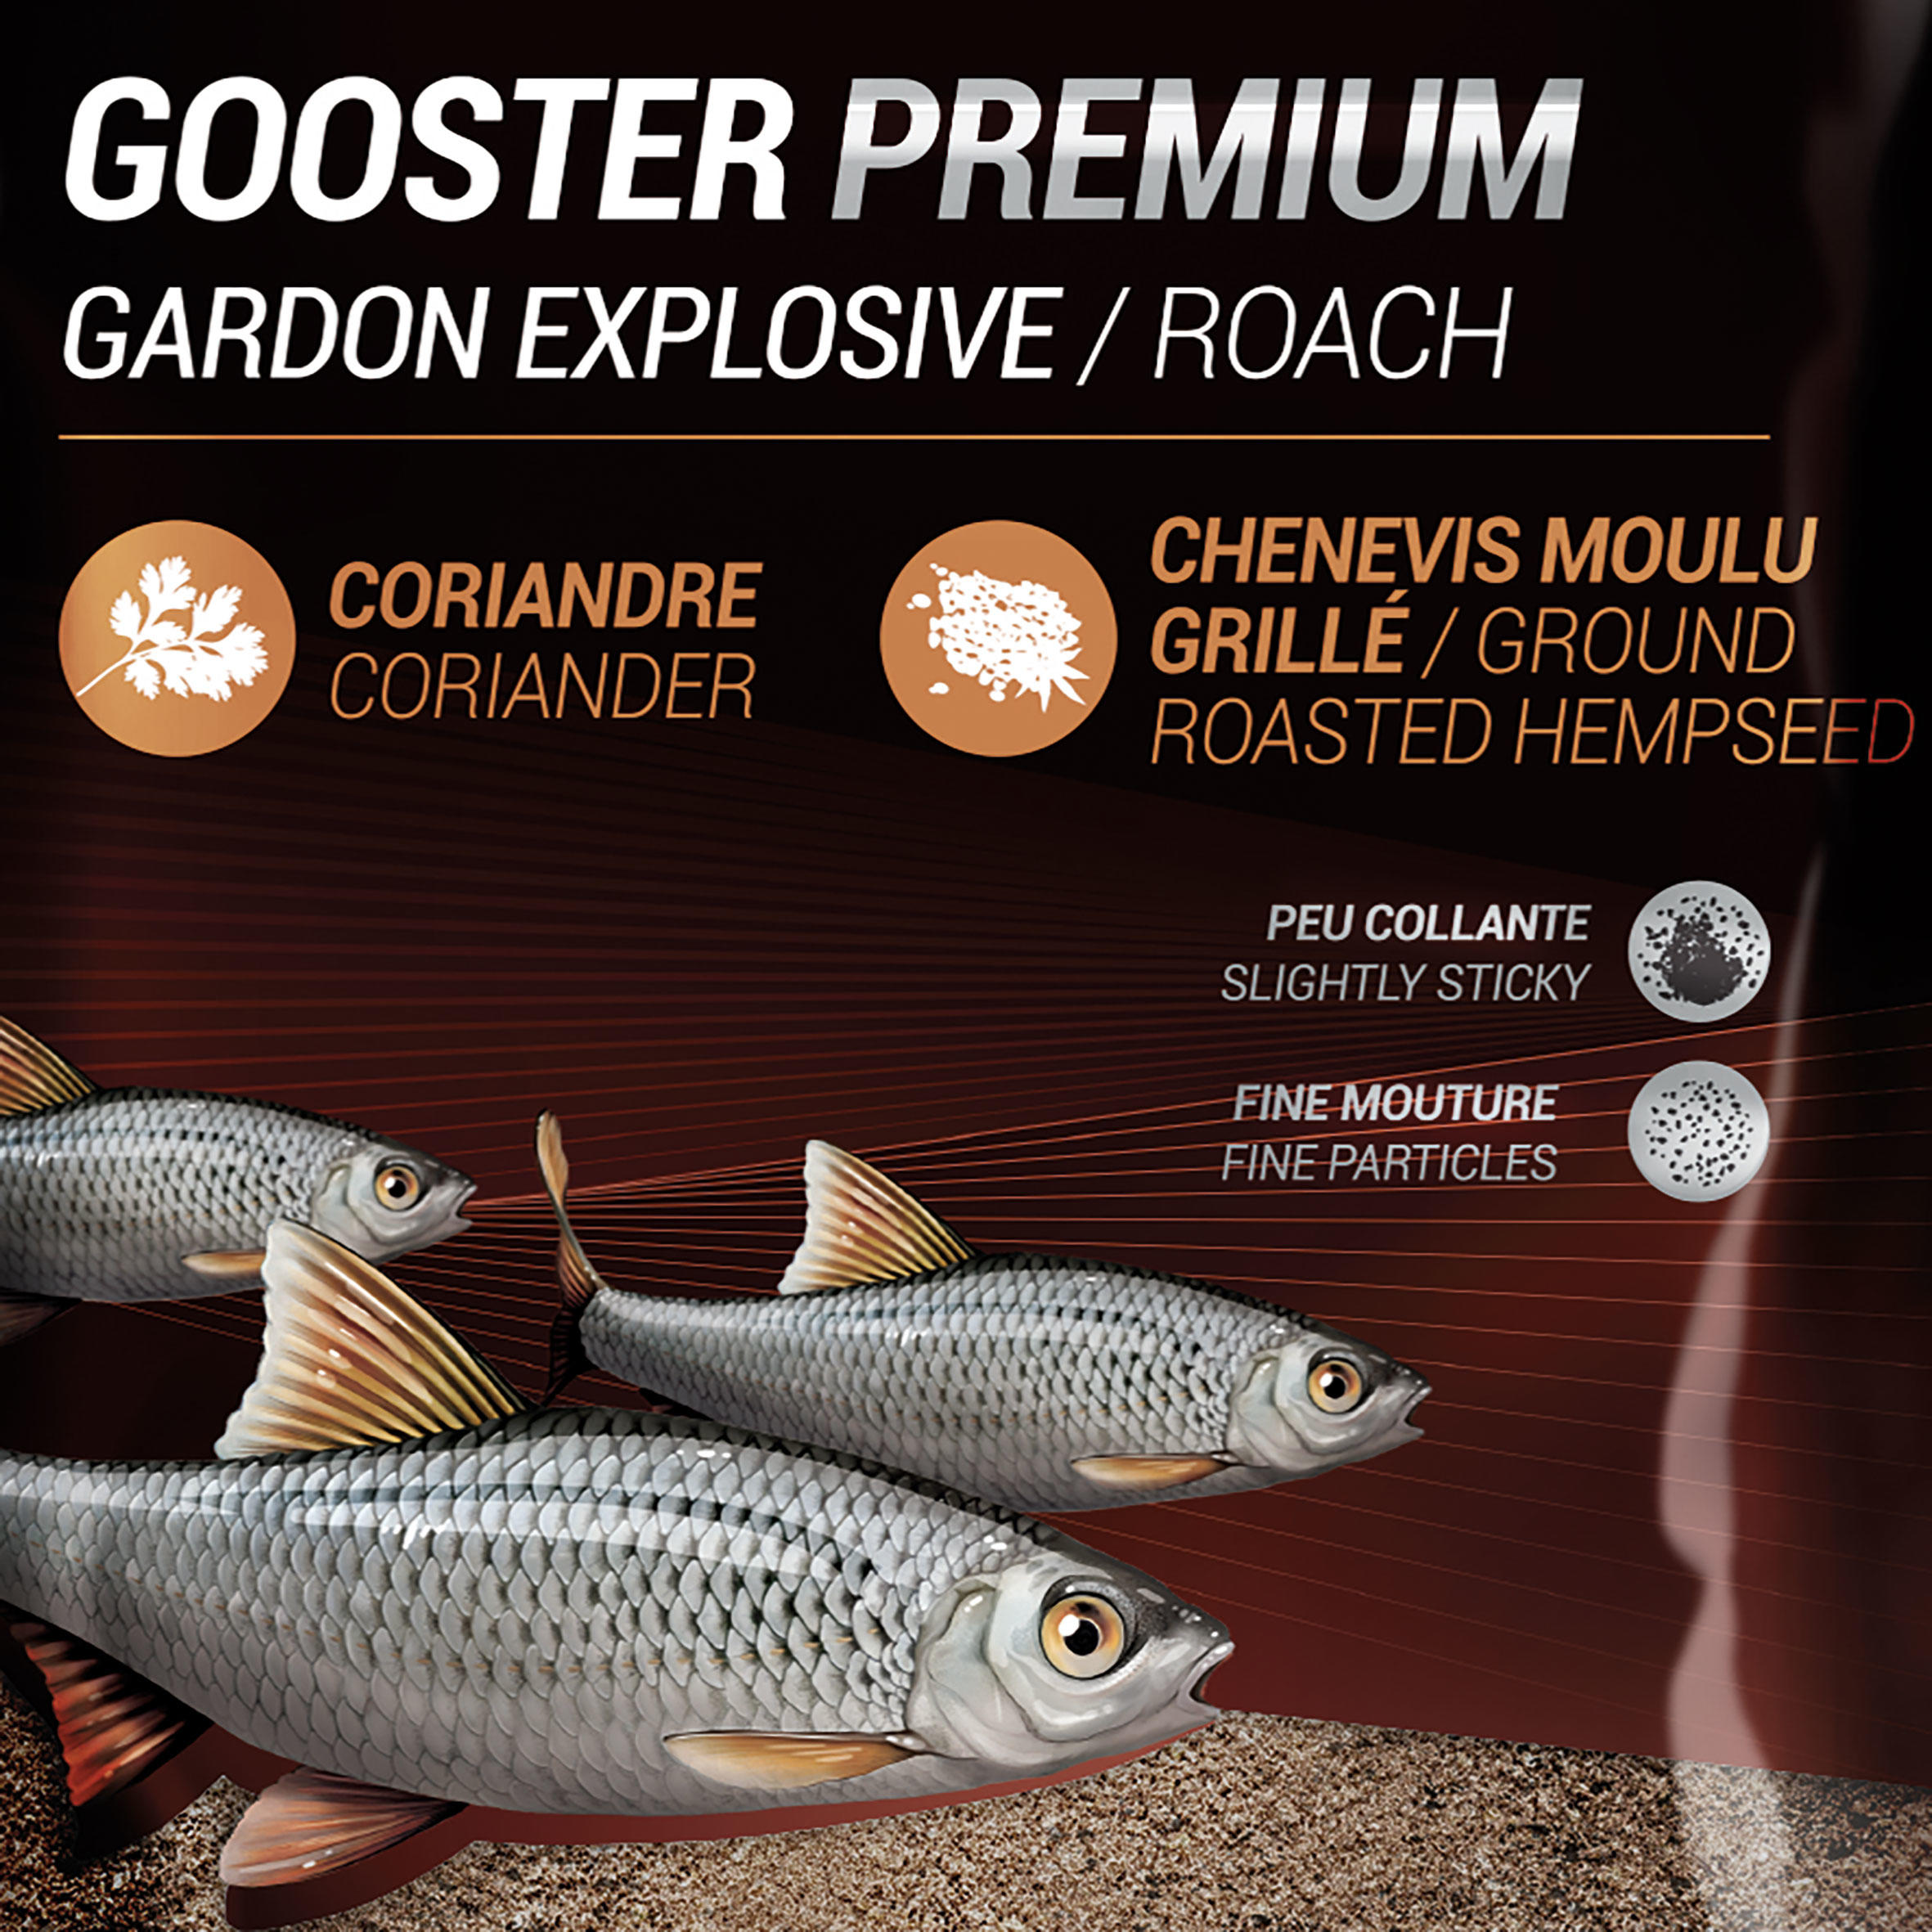 GOOSTER PREMIUM ROACH BAIT EXPLOSIVE 1kg 2/6